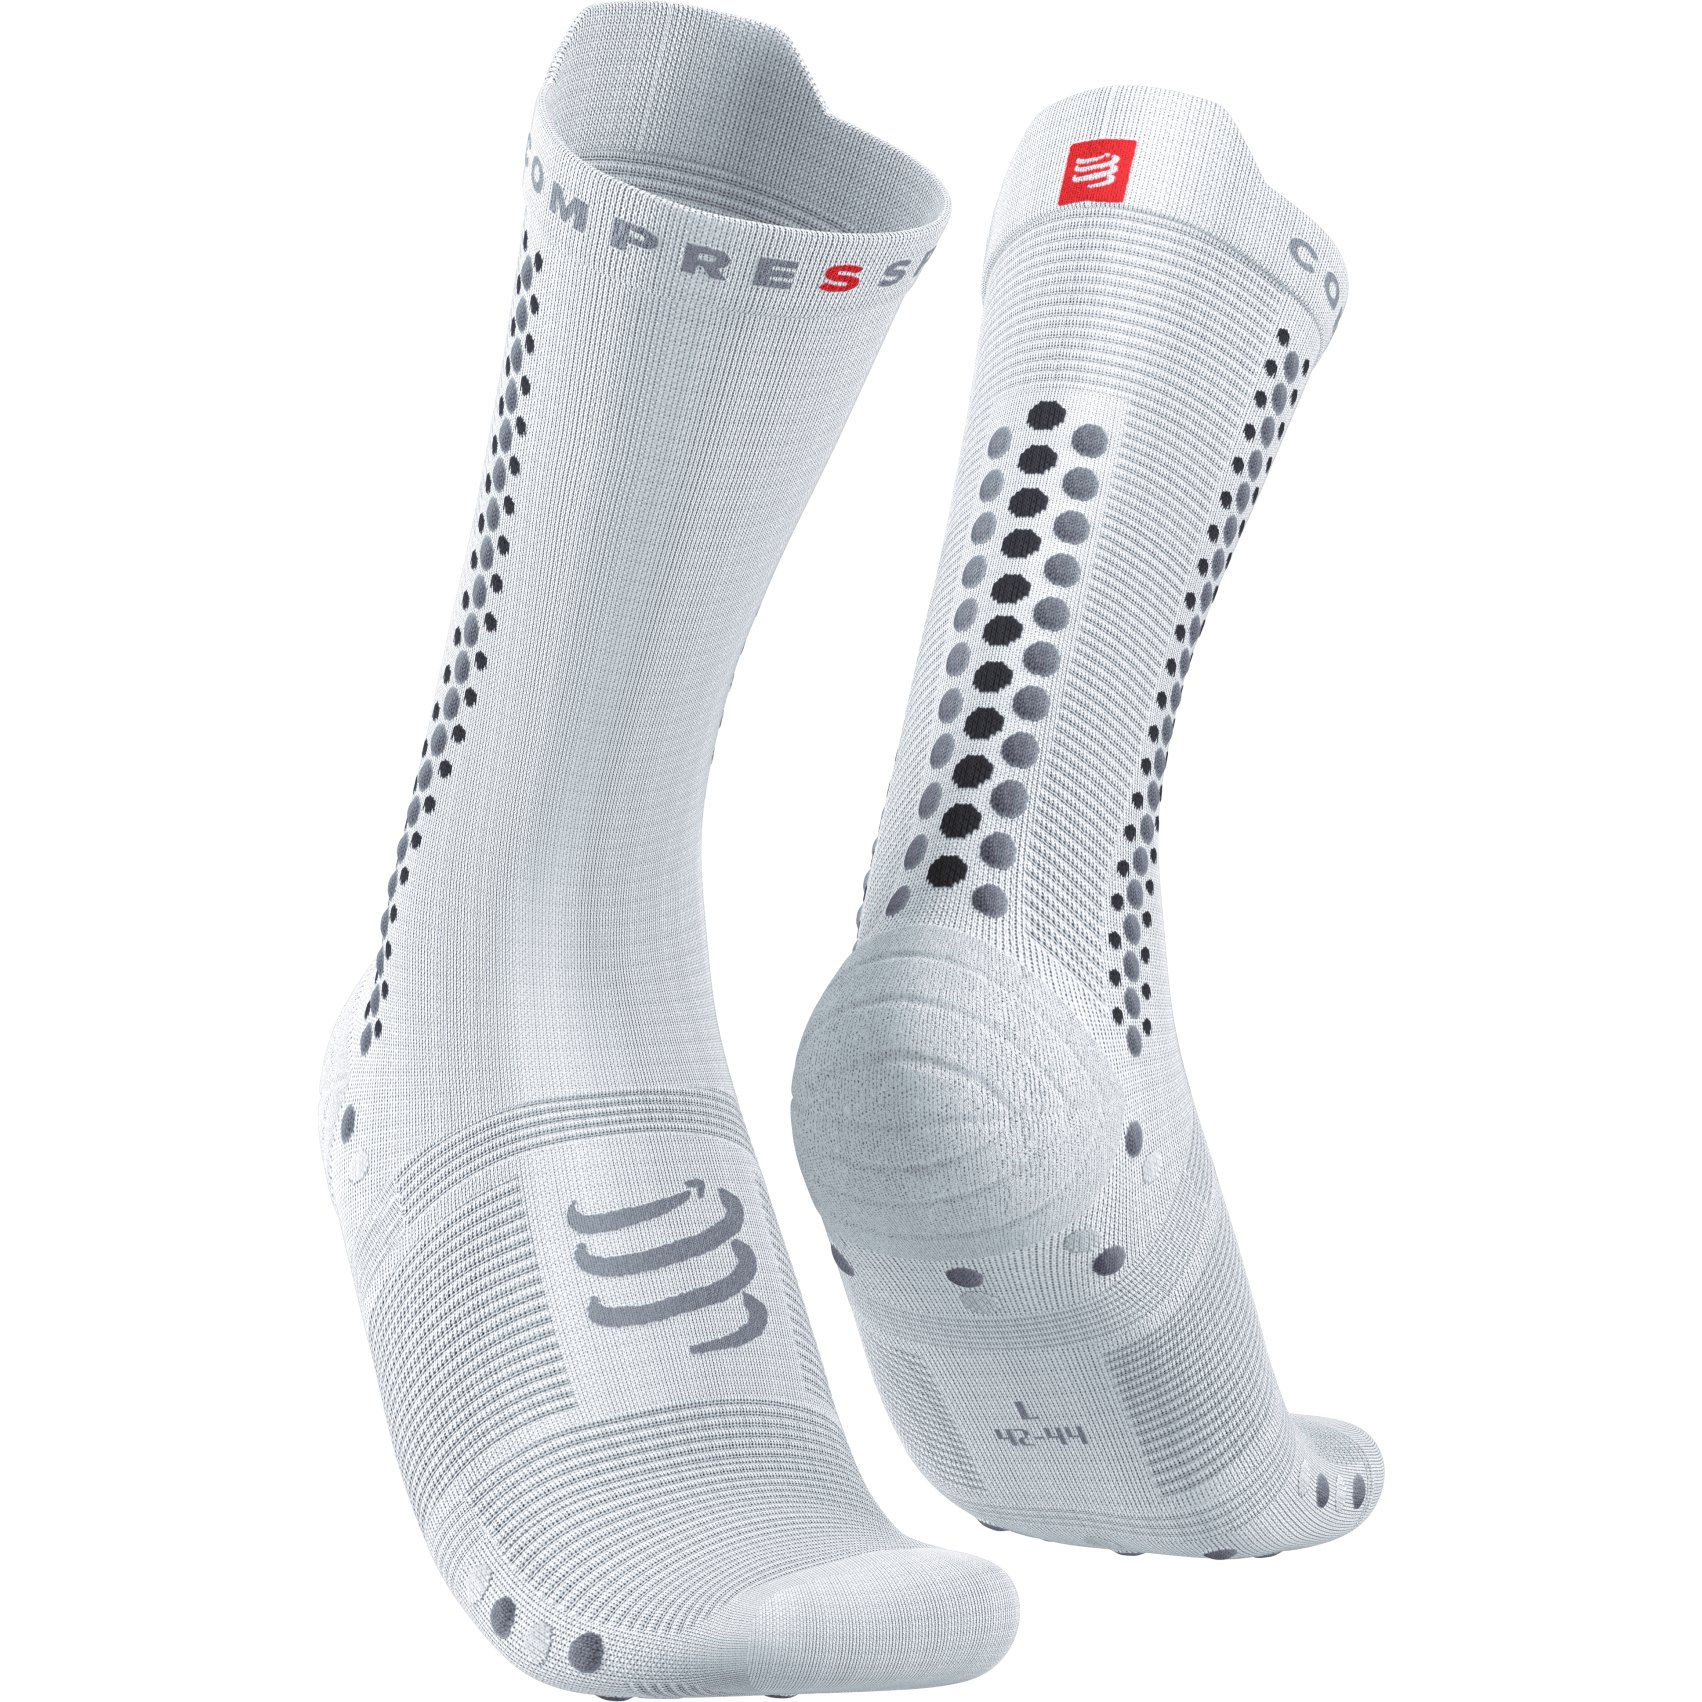 Picture of Compressport Pro Racing Compression Socks v4.0 Bike - white/alloy